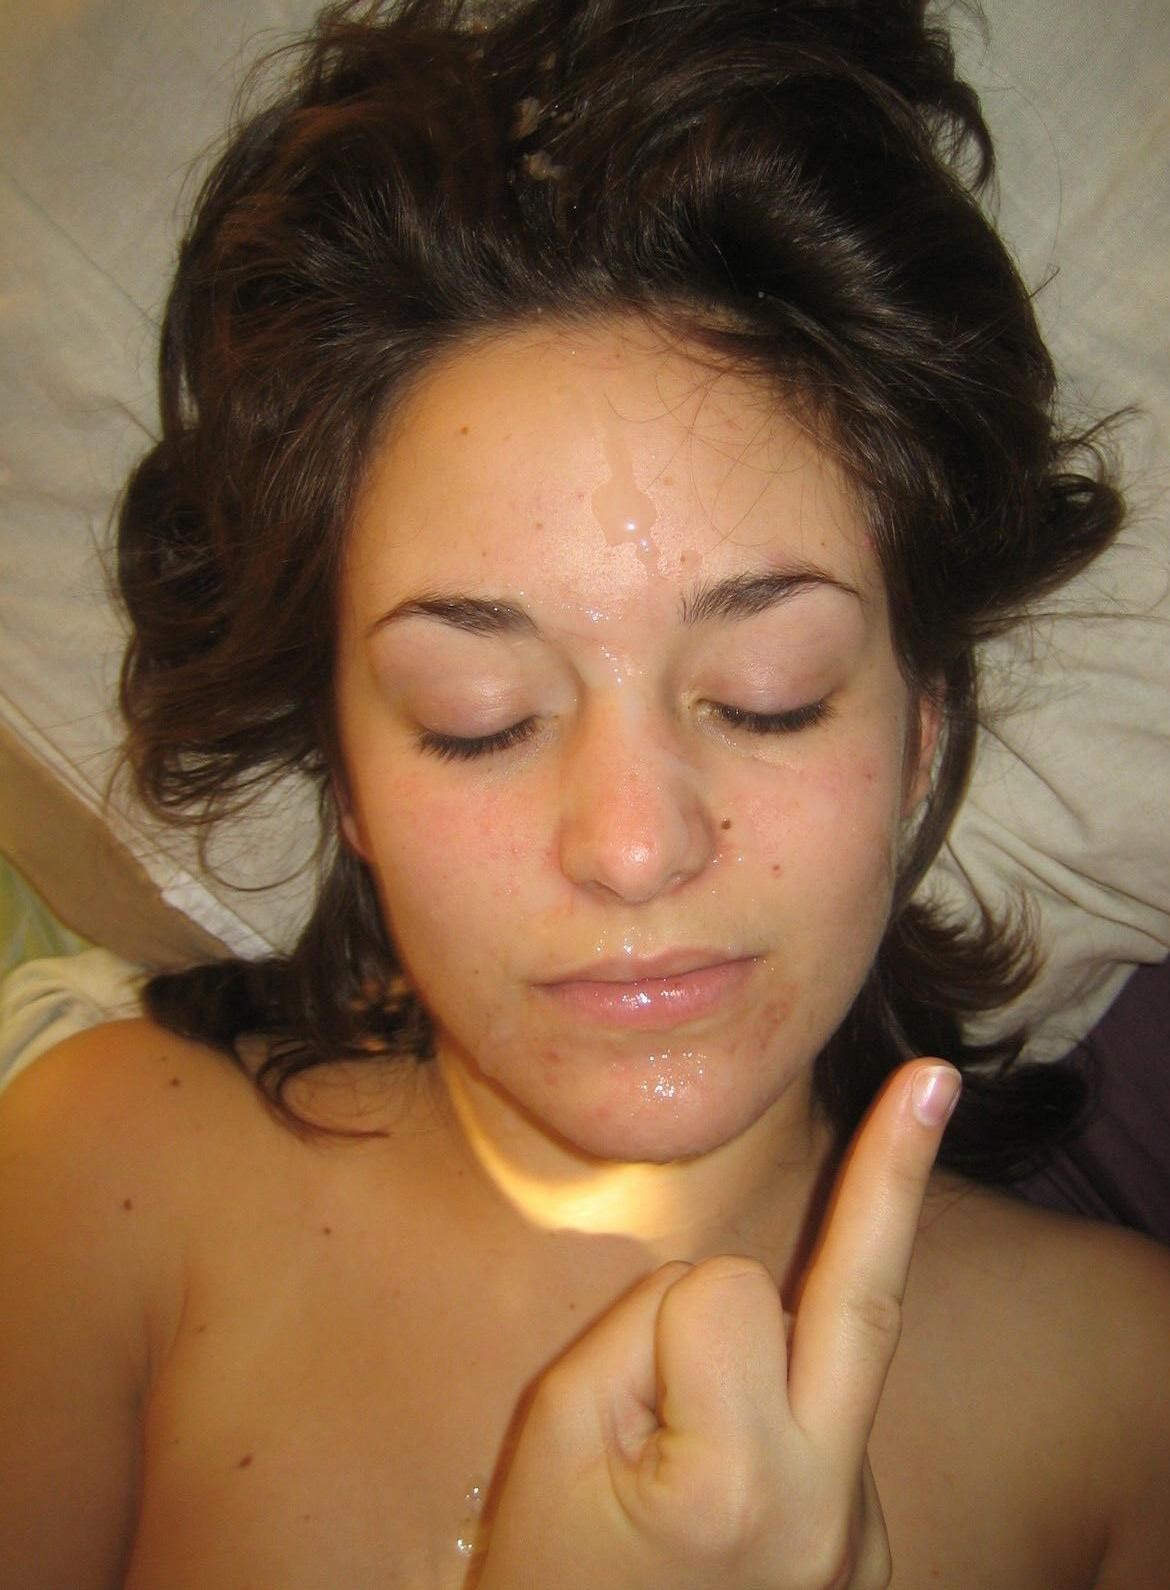 Middle finger facial cumshot (36 pictures) photo photo